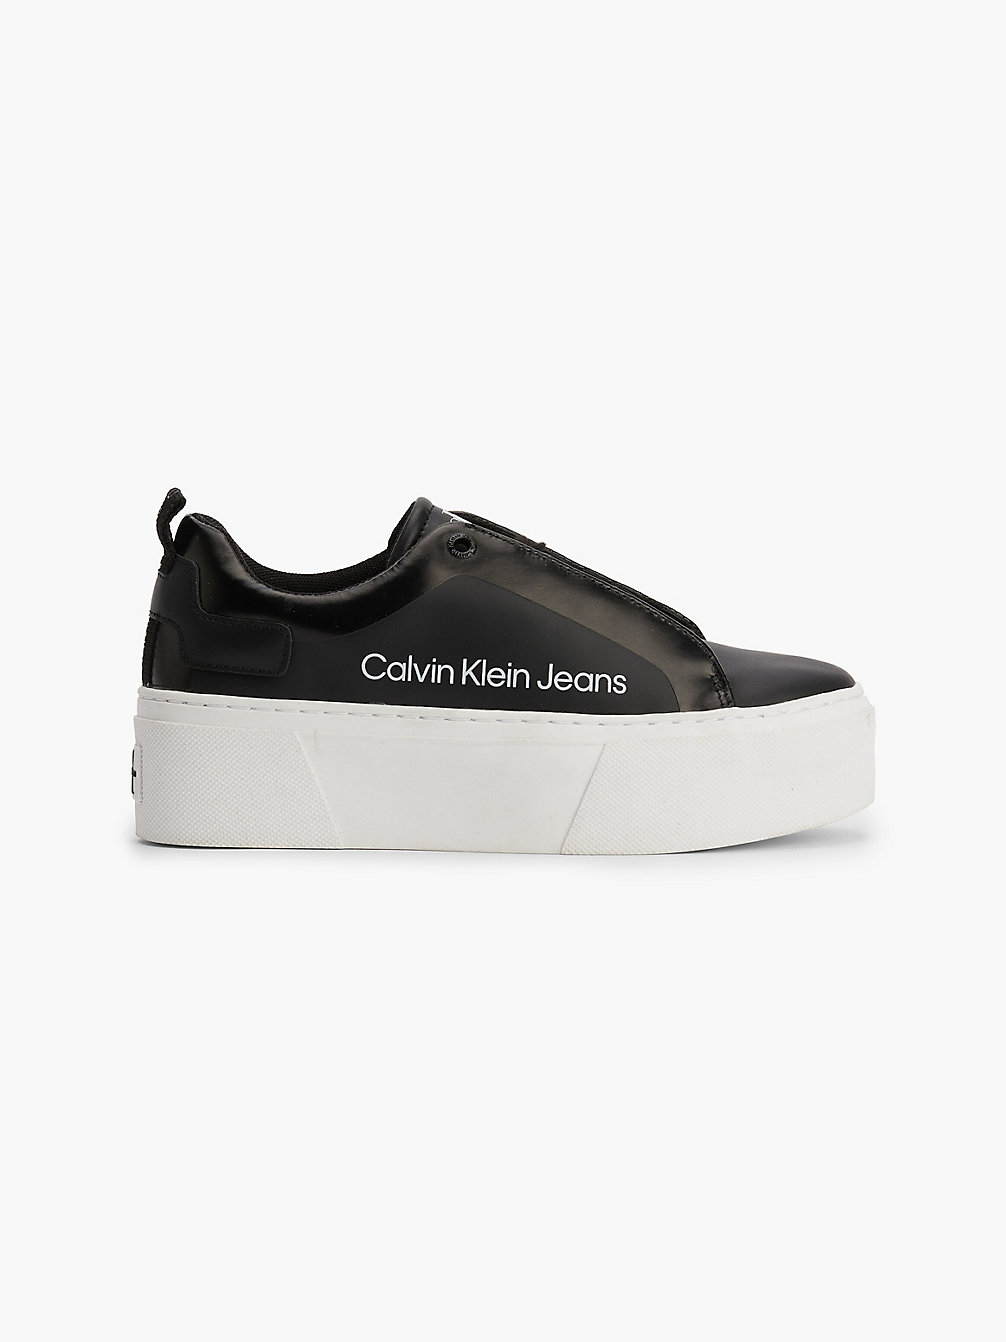 BLACK > Leren Plateau Sneakers > undefined dames - Calvin Klein